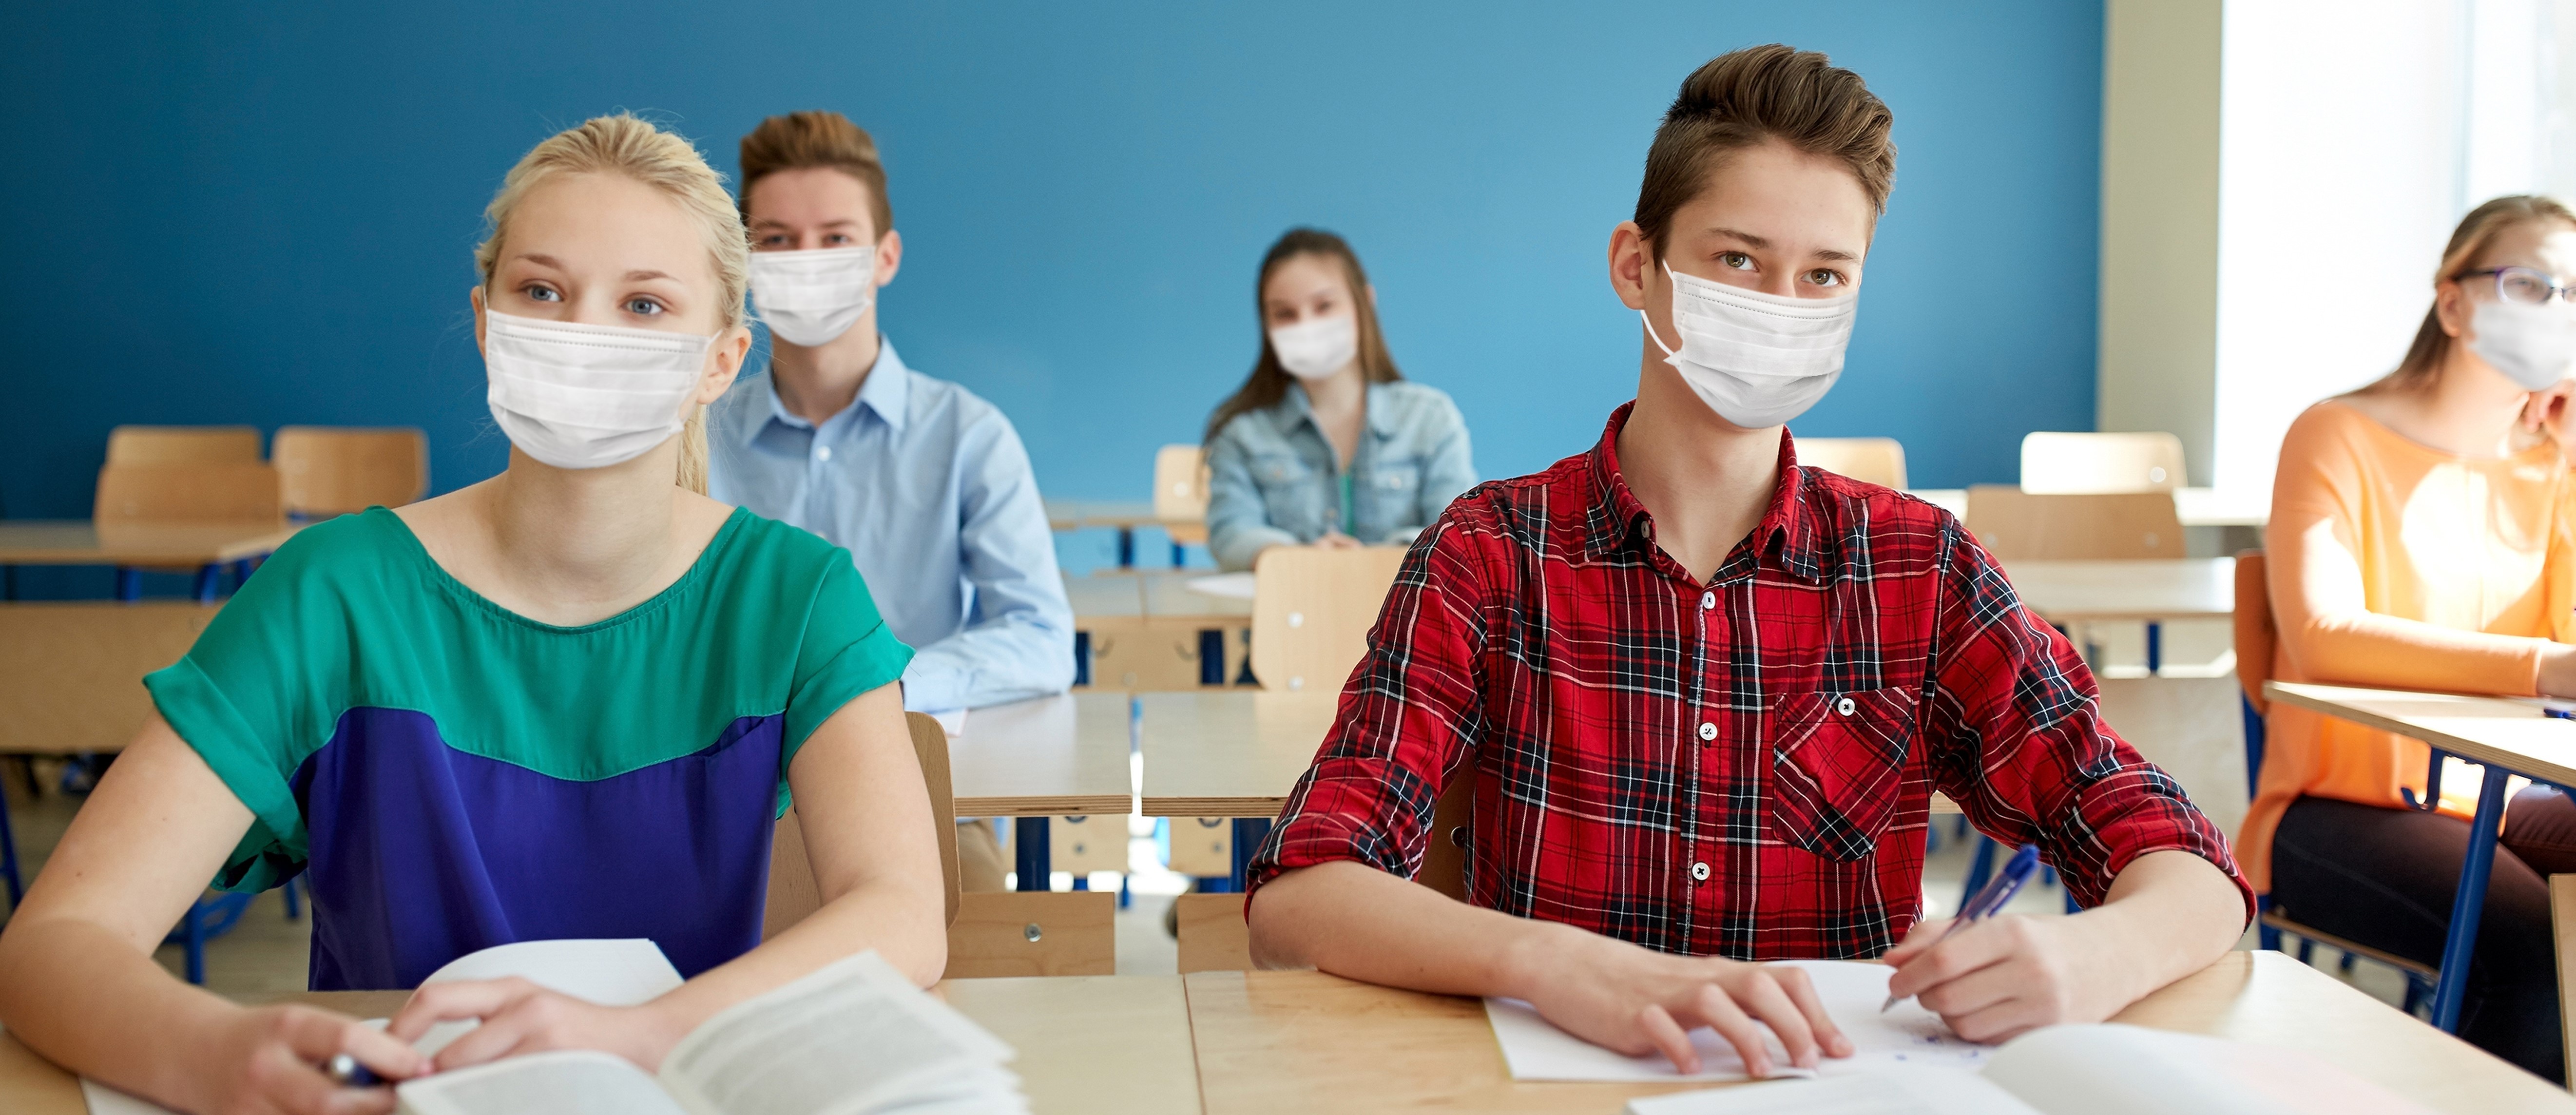 Teenagers wearing masks in a school setting